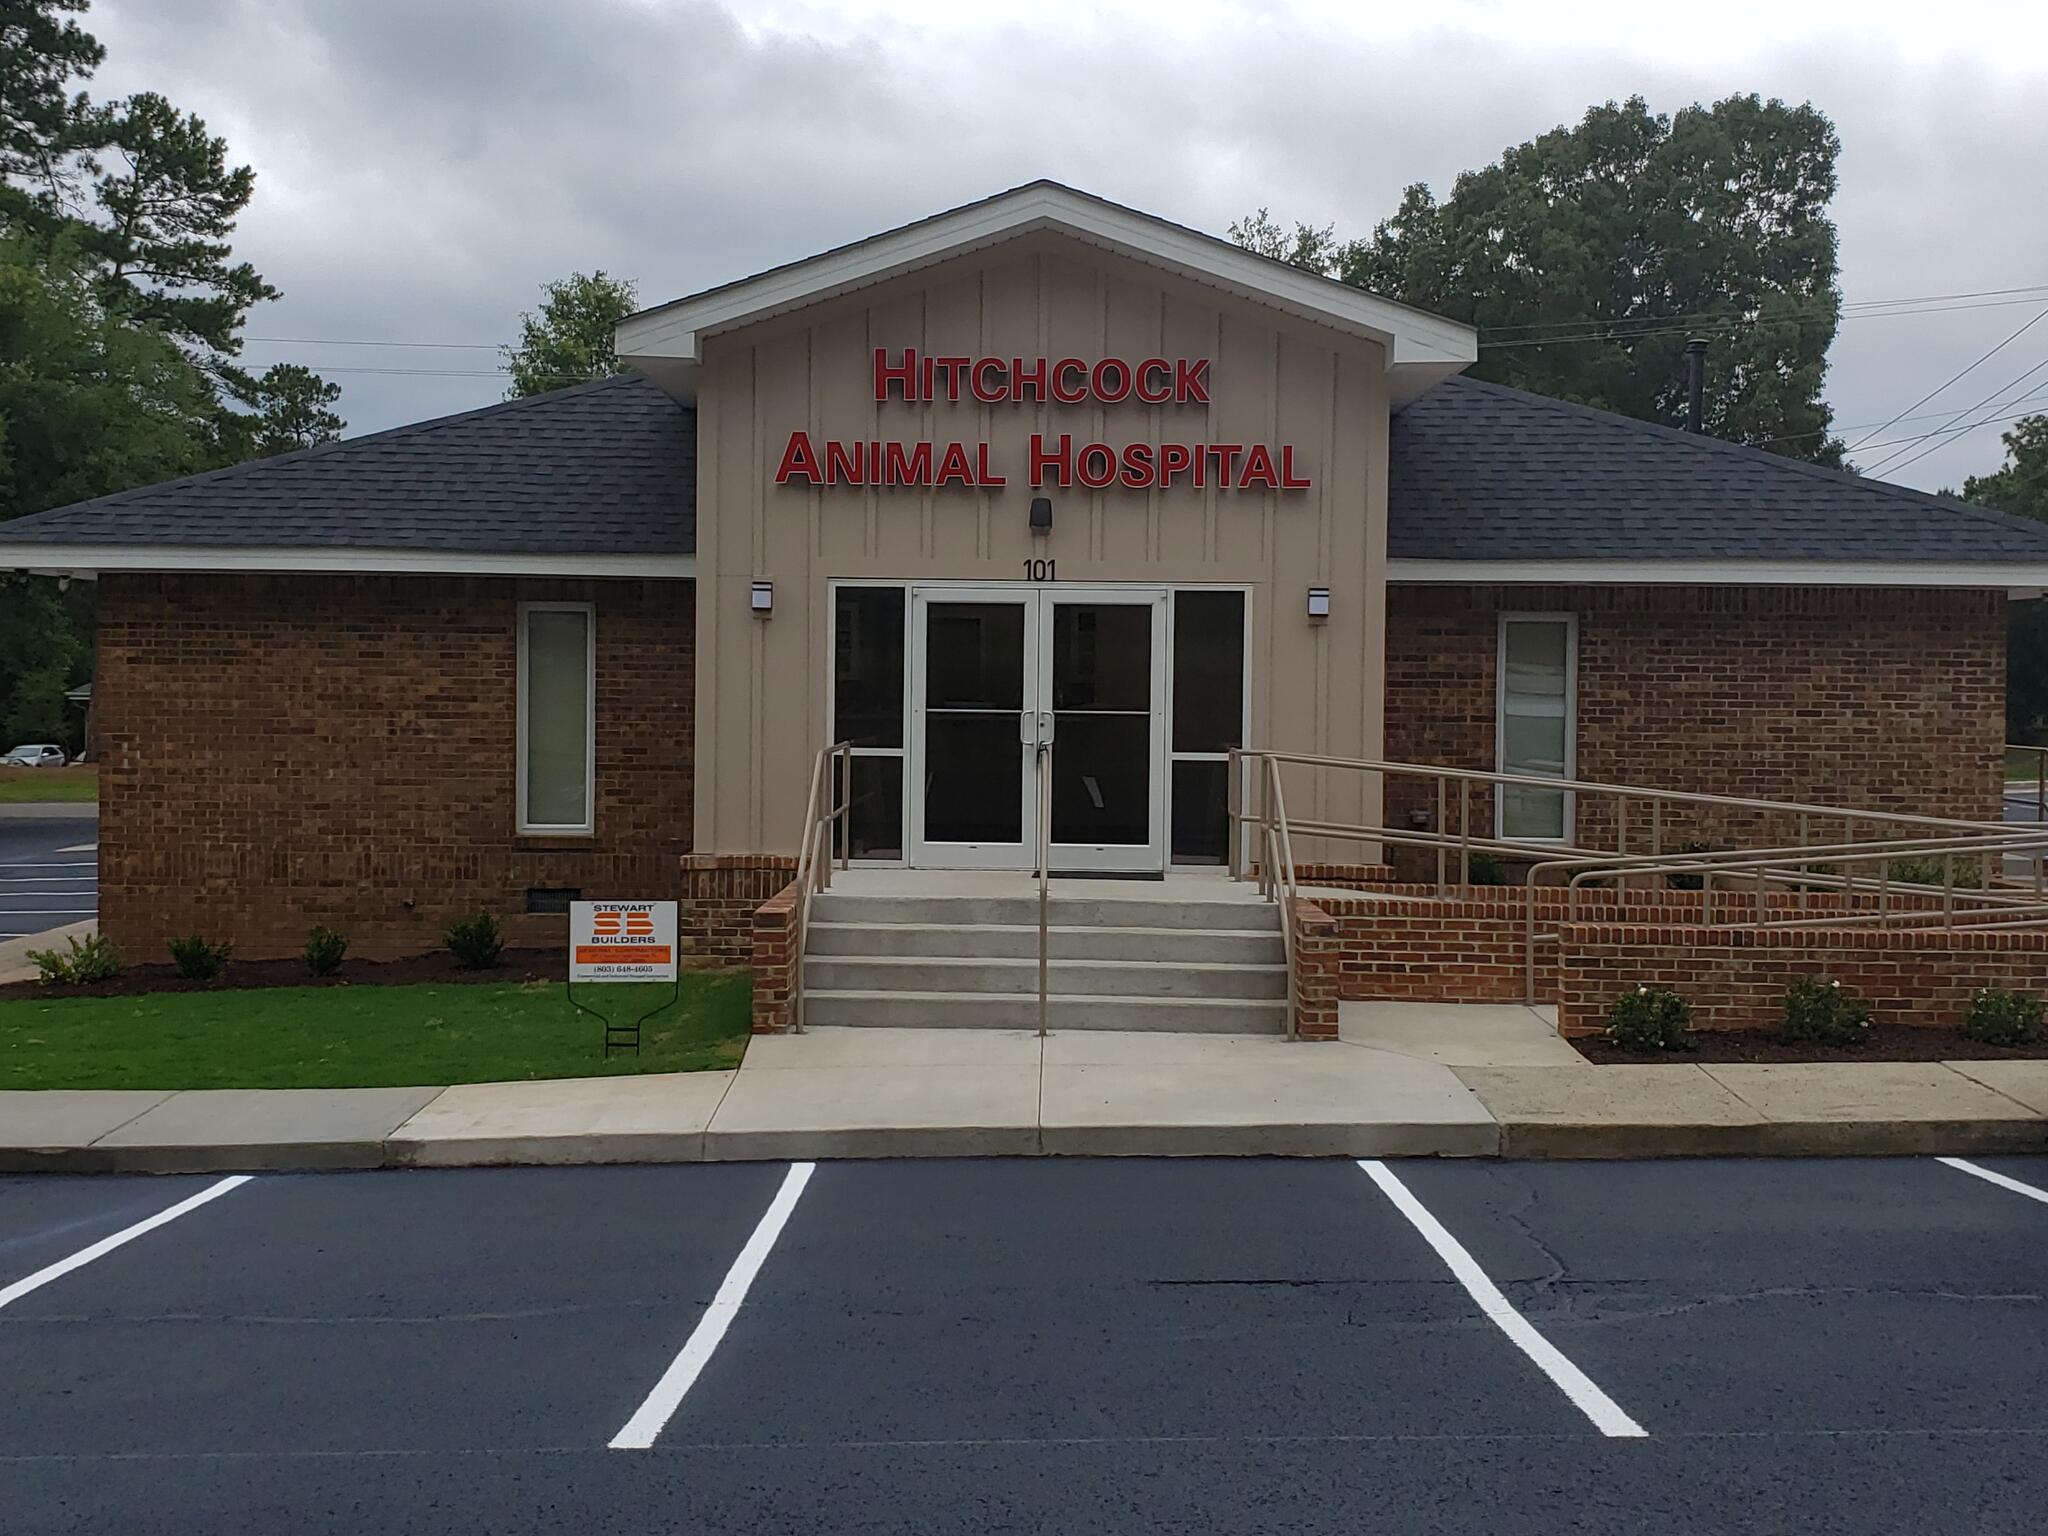 Hitchcock Animal Hospital - Aiken, SC